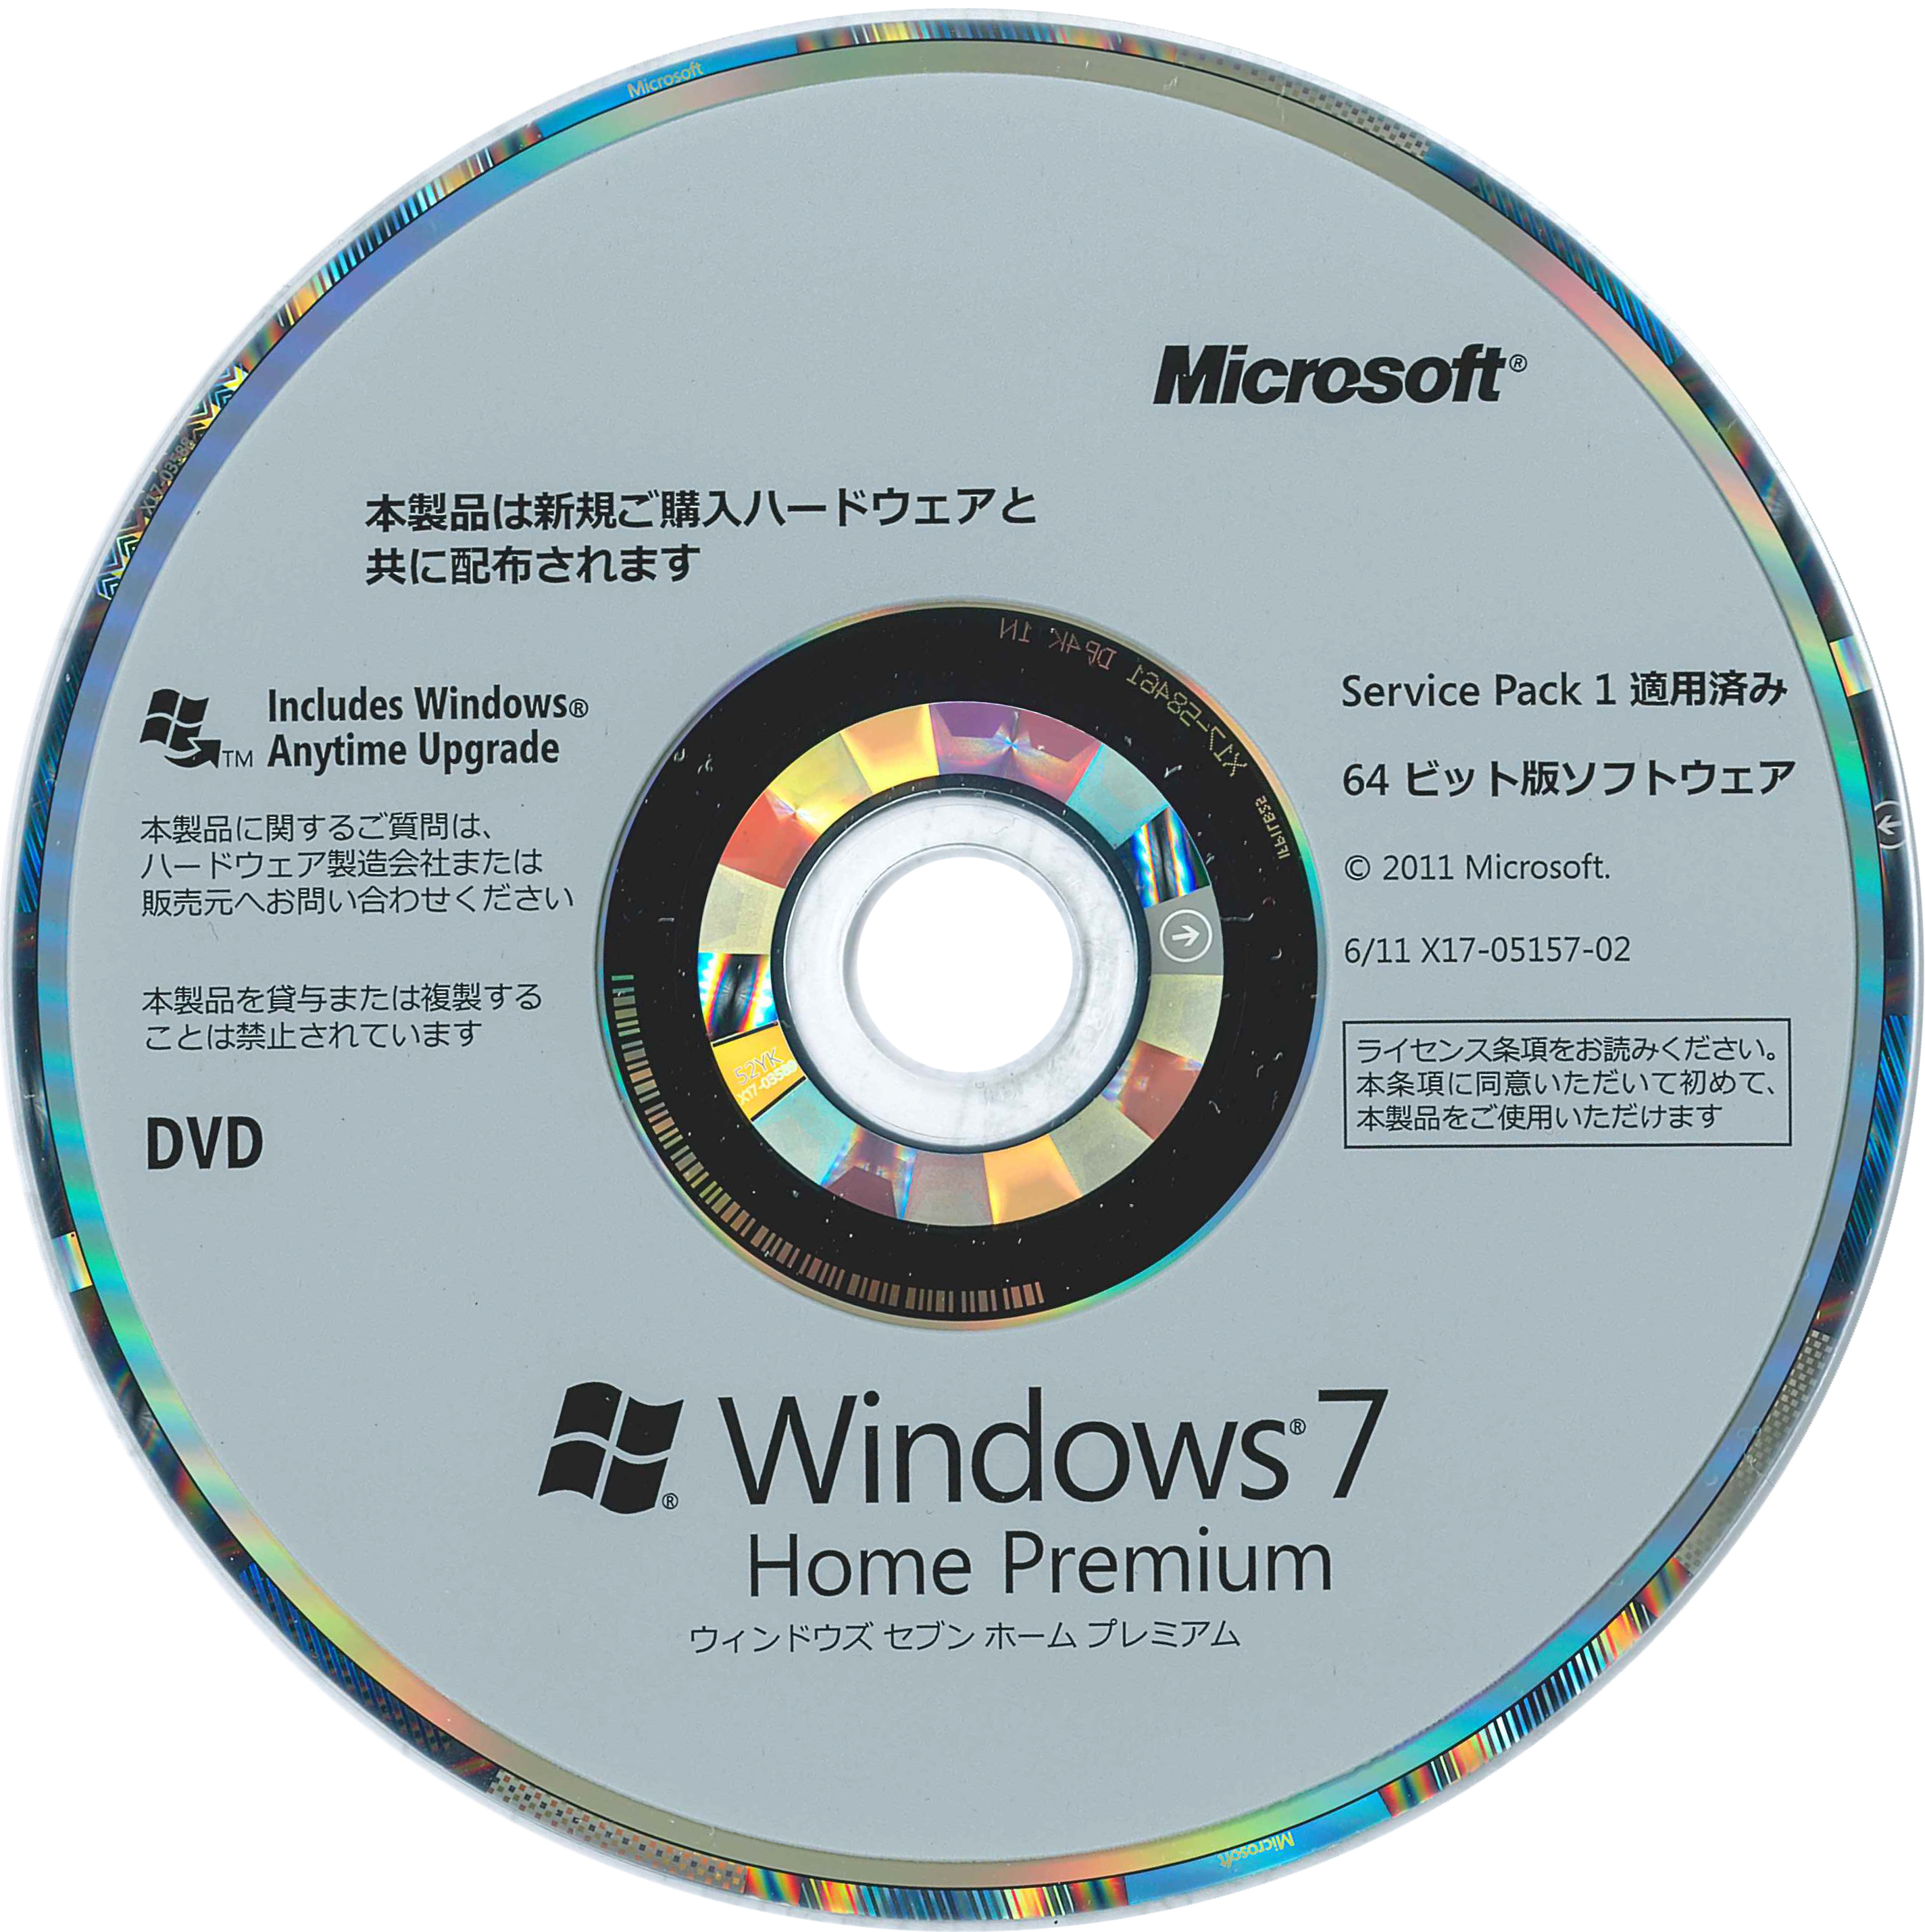 download the last version for windows ContourTrace Premium 2.7.2